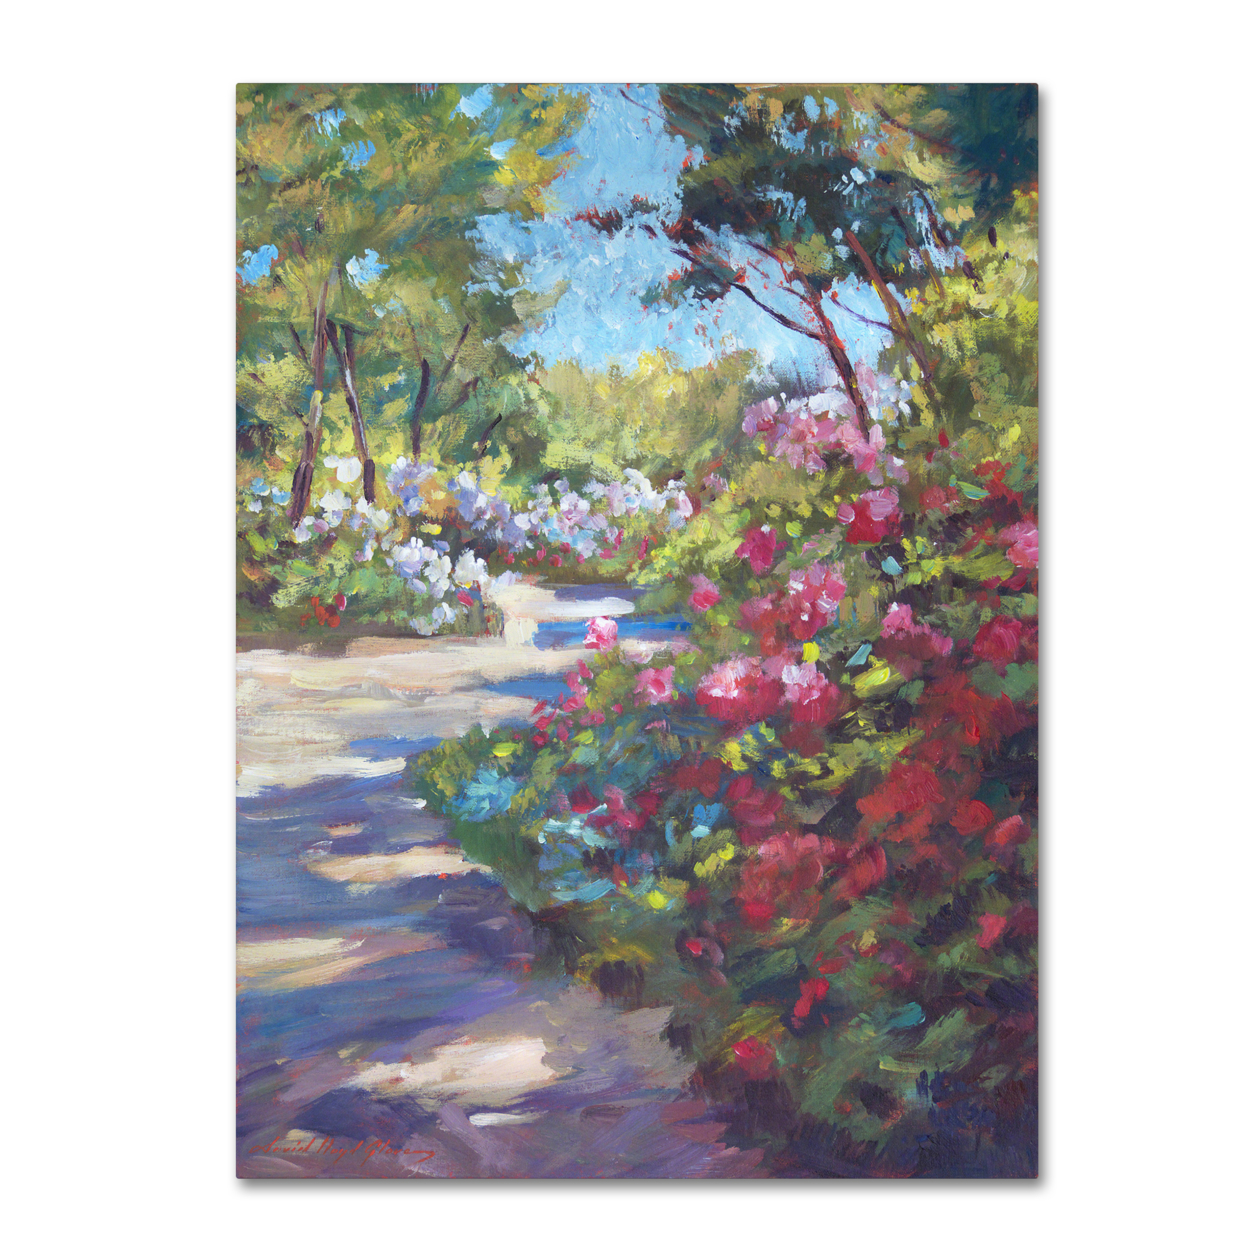 David Lloyd Glover 'Arboretum Garden Path' Canvas Wall Art 35 X 47 Inches